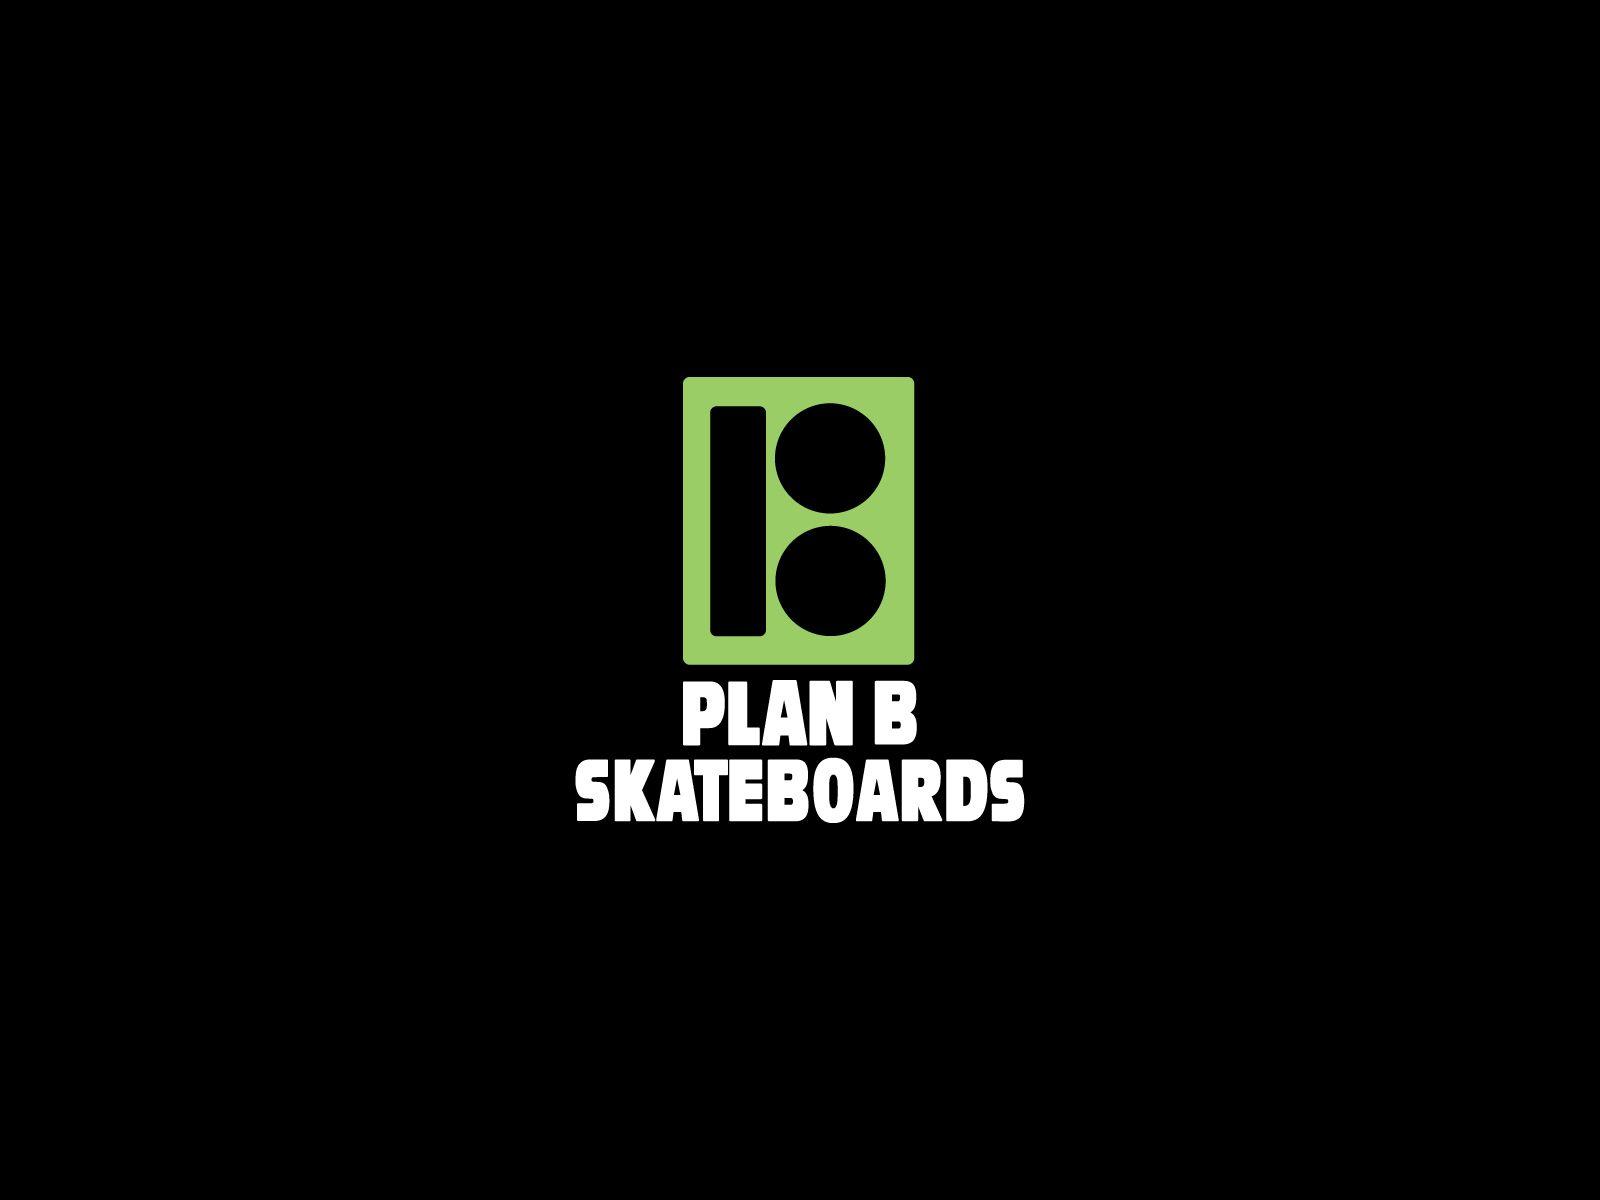 Skateboarding wallpaper, skateboard wallpaper, sk8 walls. Find